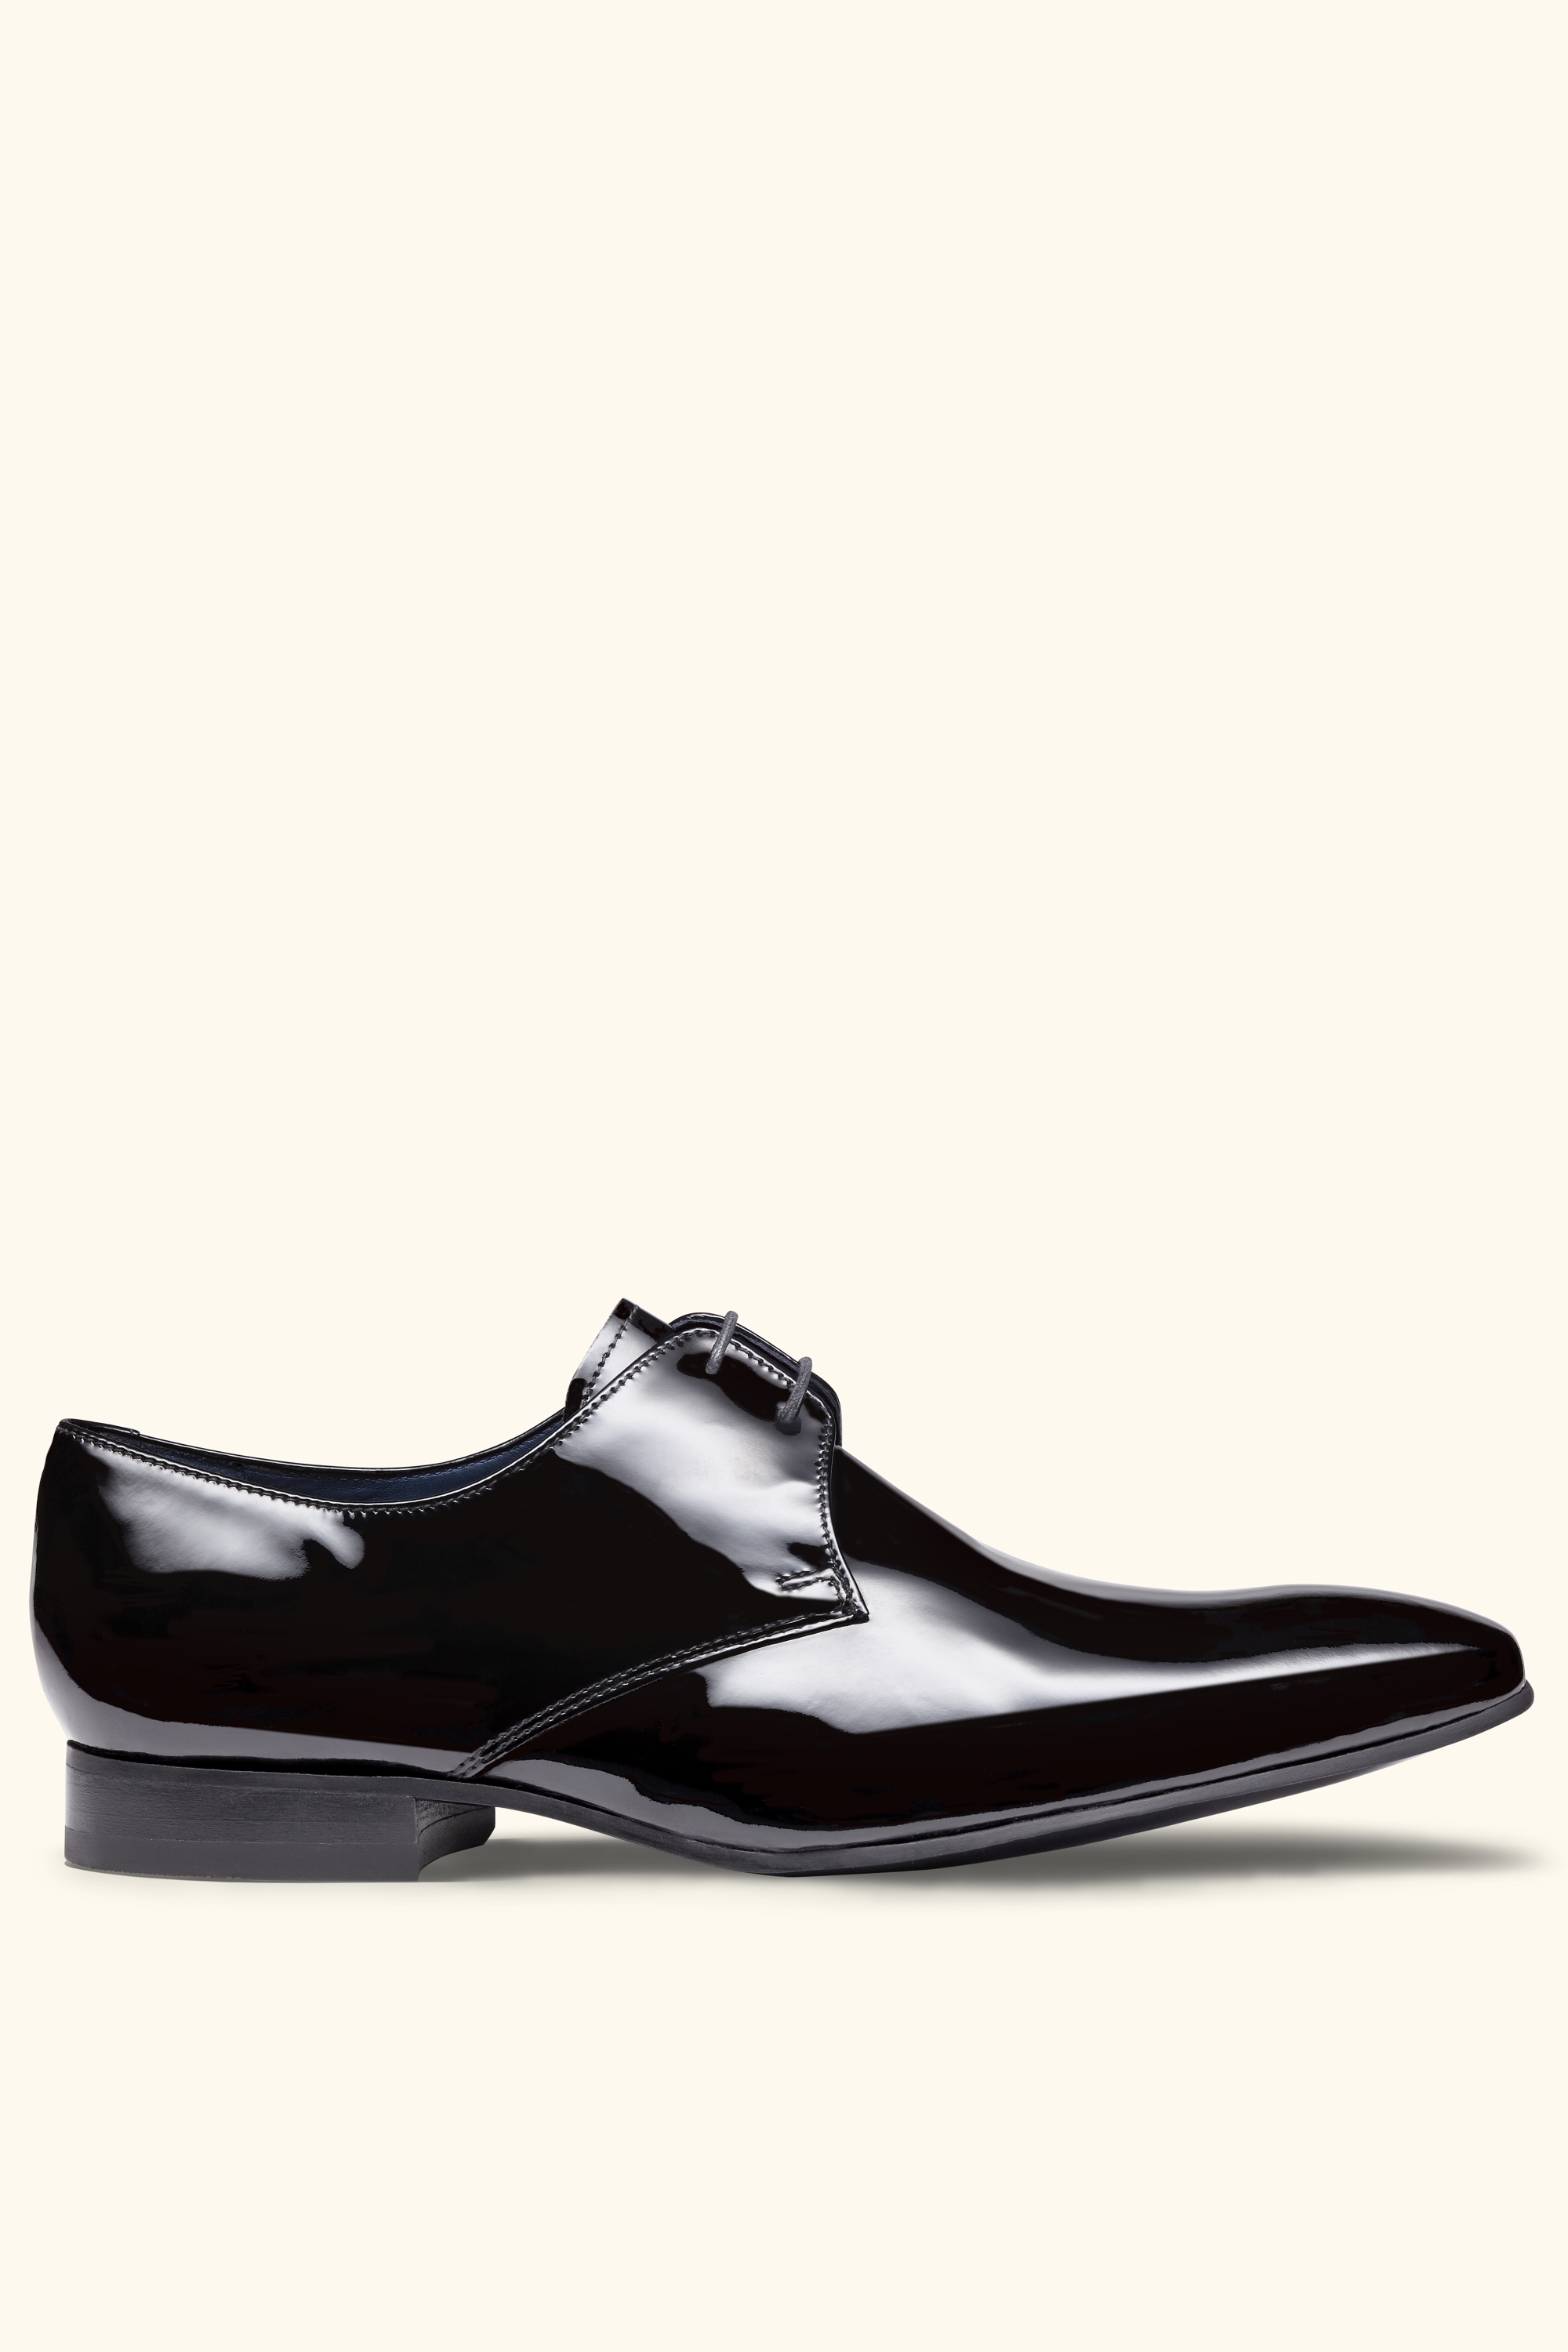 Huxley Black Patent Dress Shoe | Buy Online at Moss